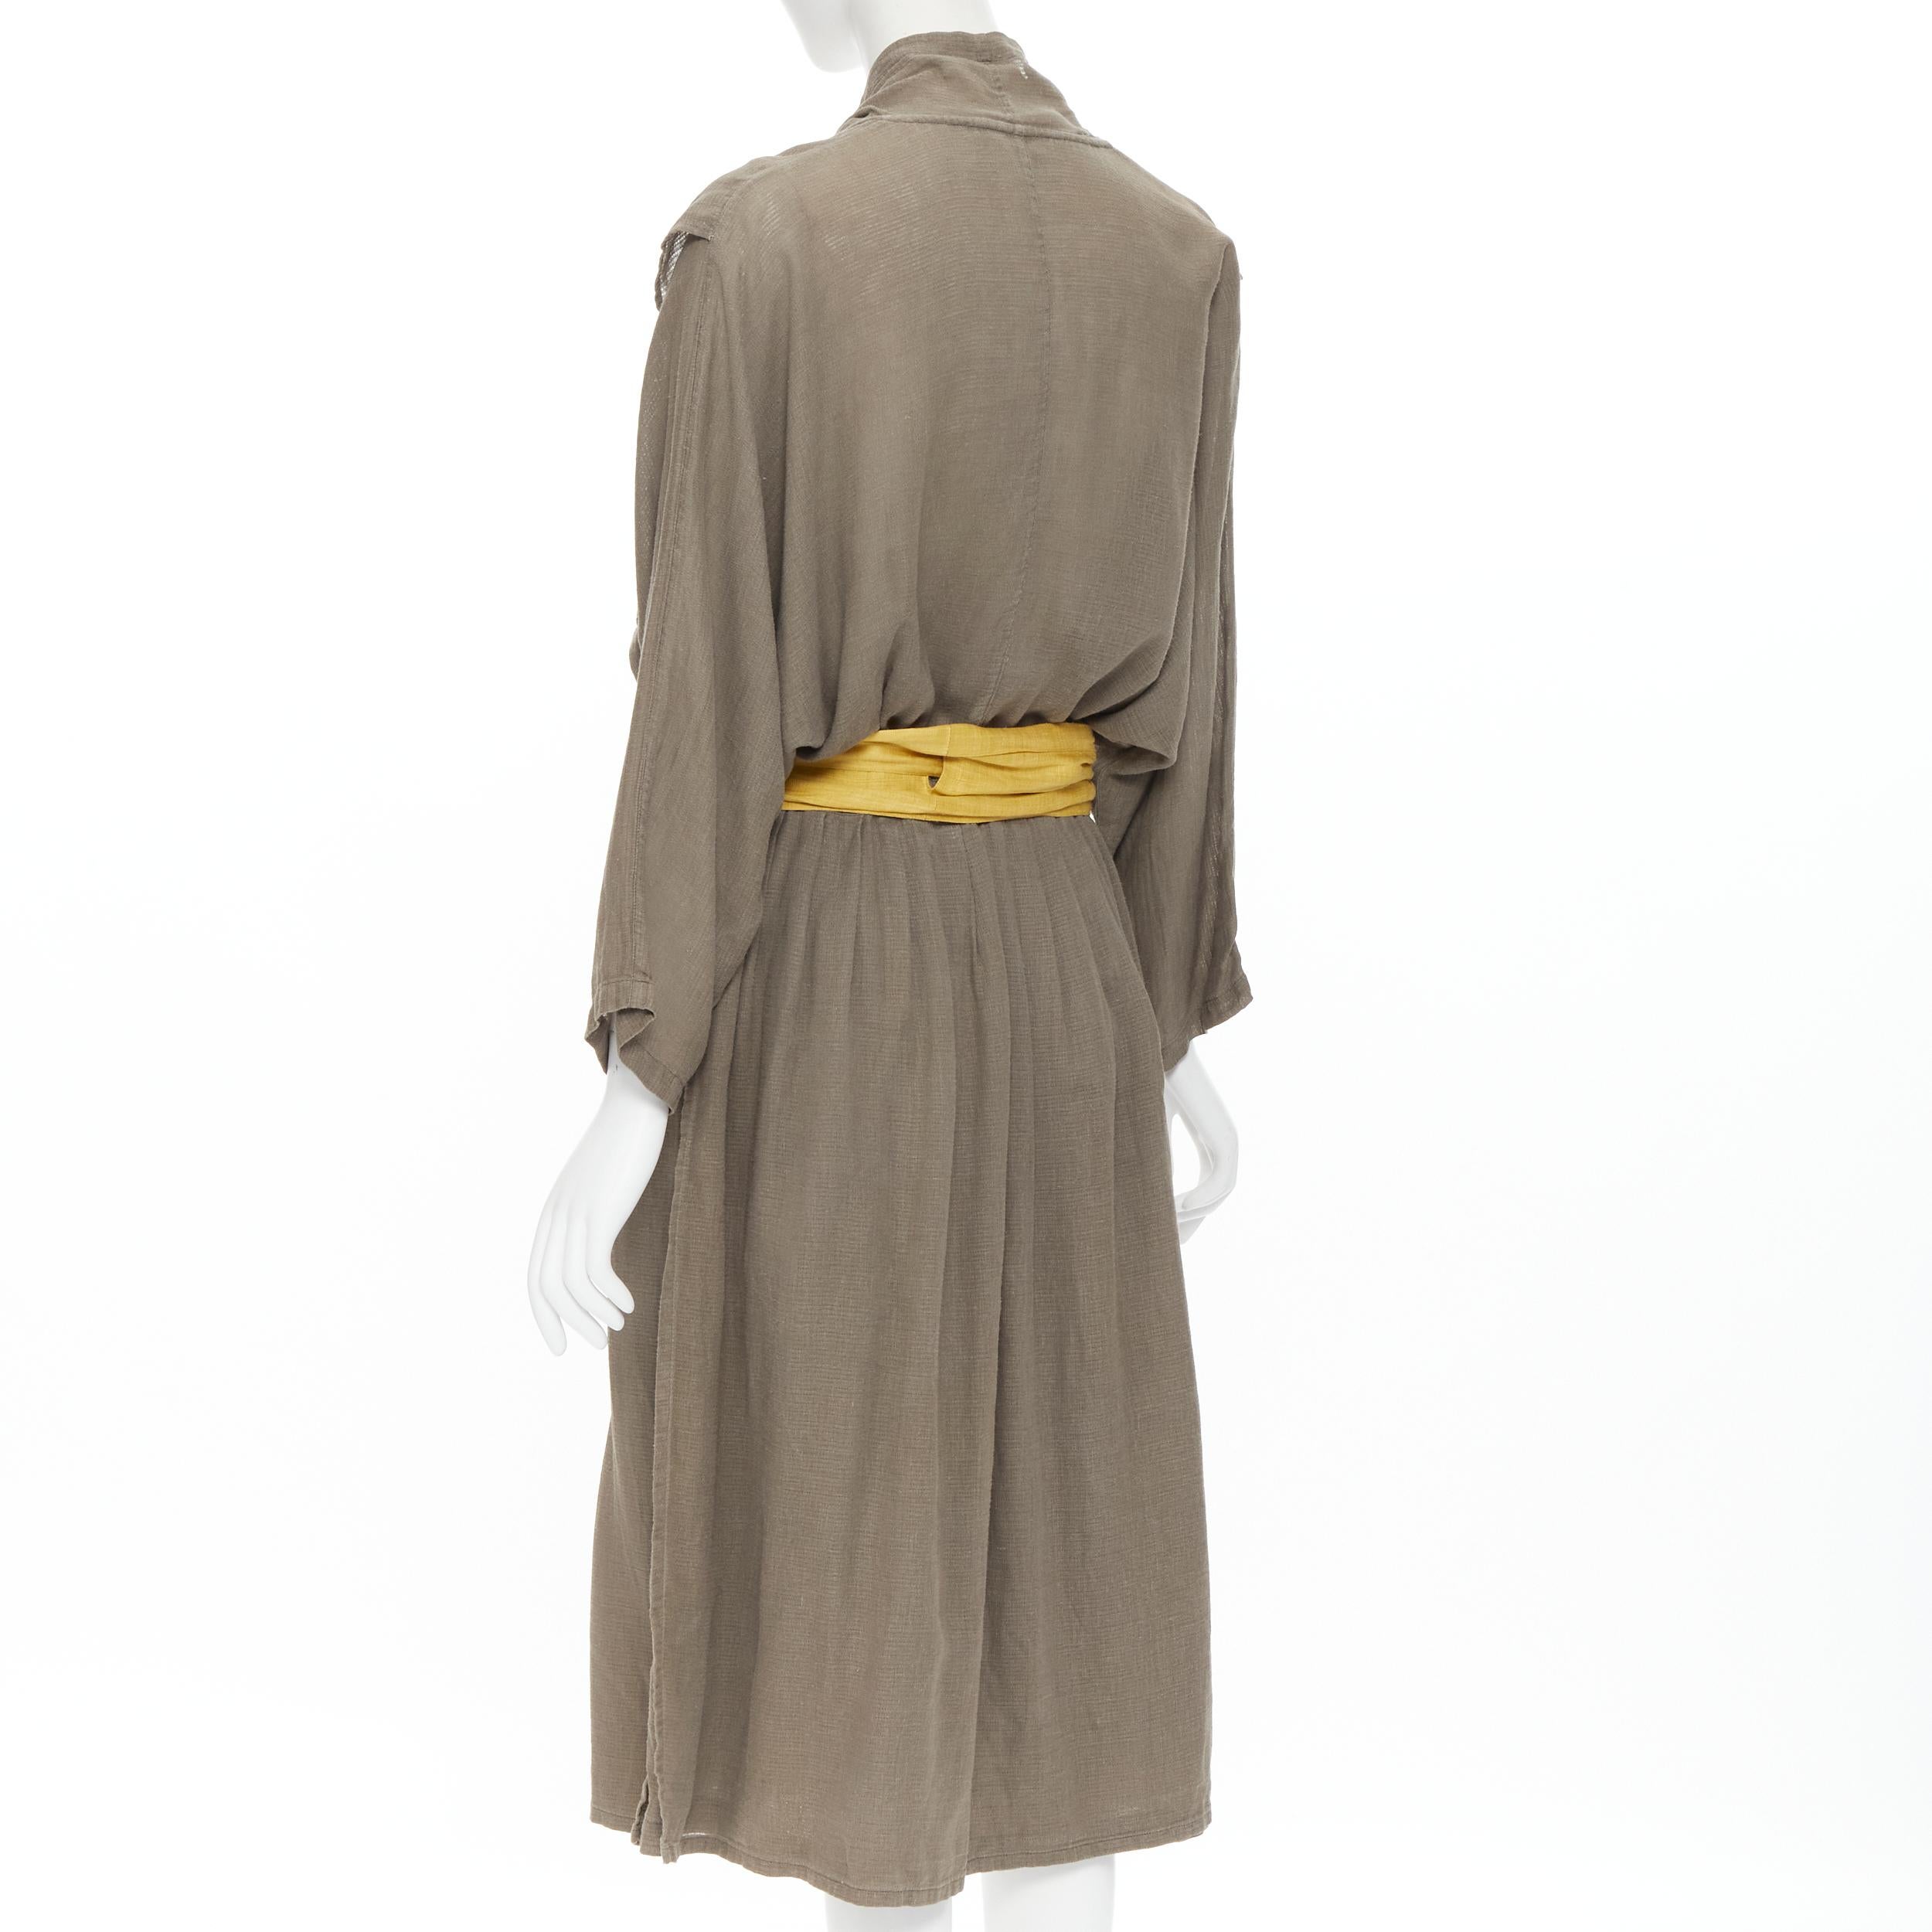 Women's vintage ISSEY MIYAKE 1980's beige linen yellow obi belt cowl neck dress M rare For Sale